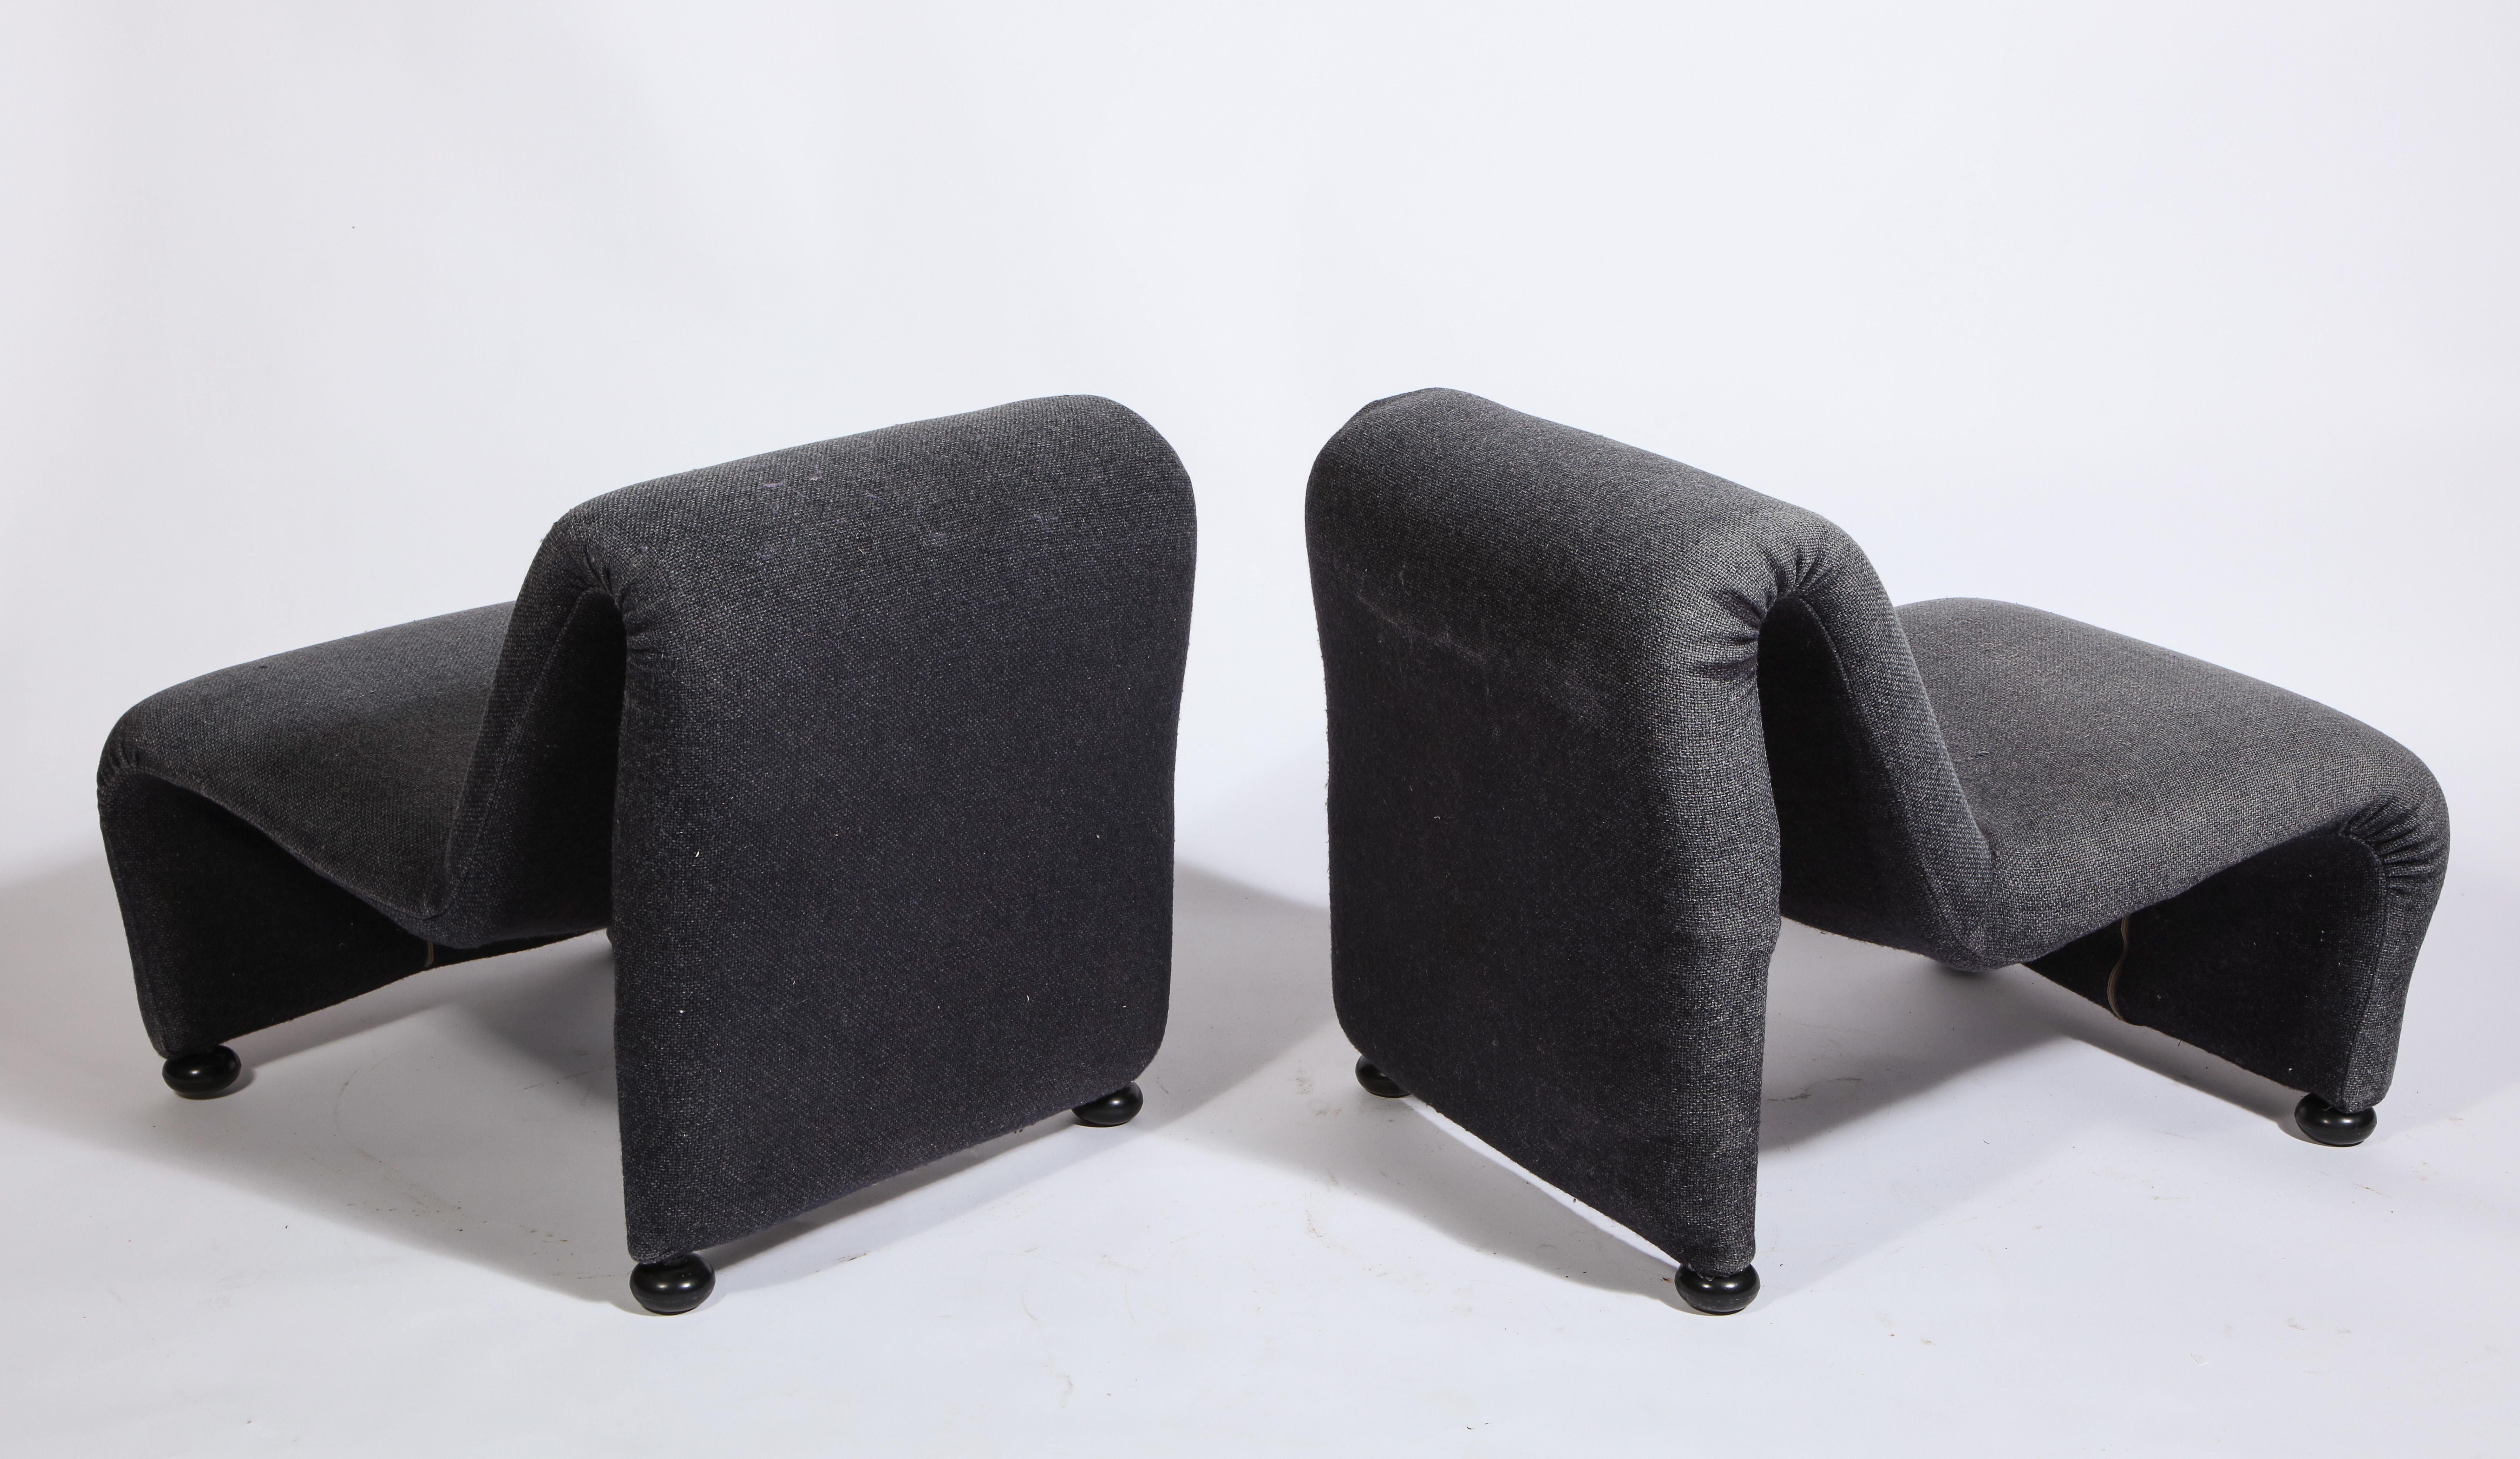 20th Century Sculptural Etienne Fermigier Lounge Chairs, Grey, 1970s, France